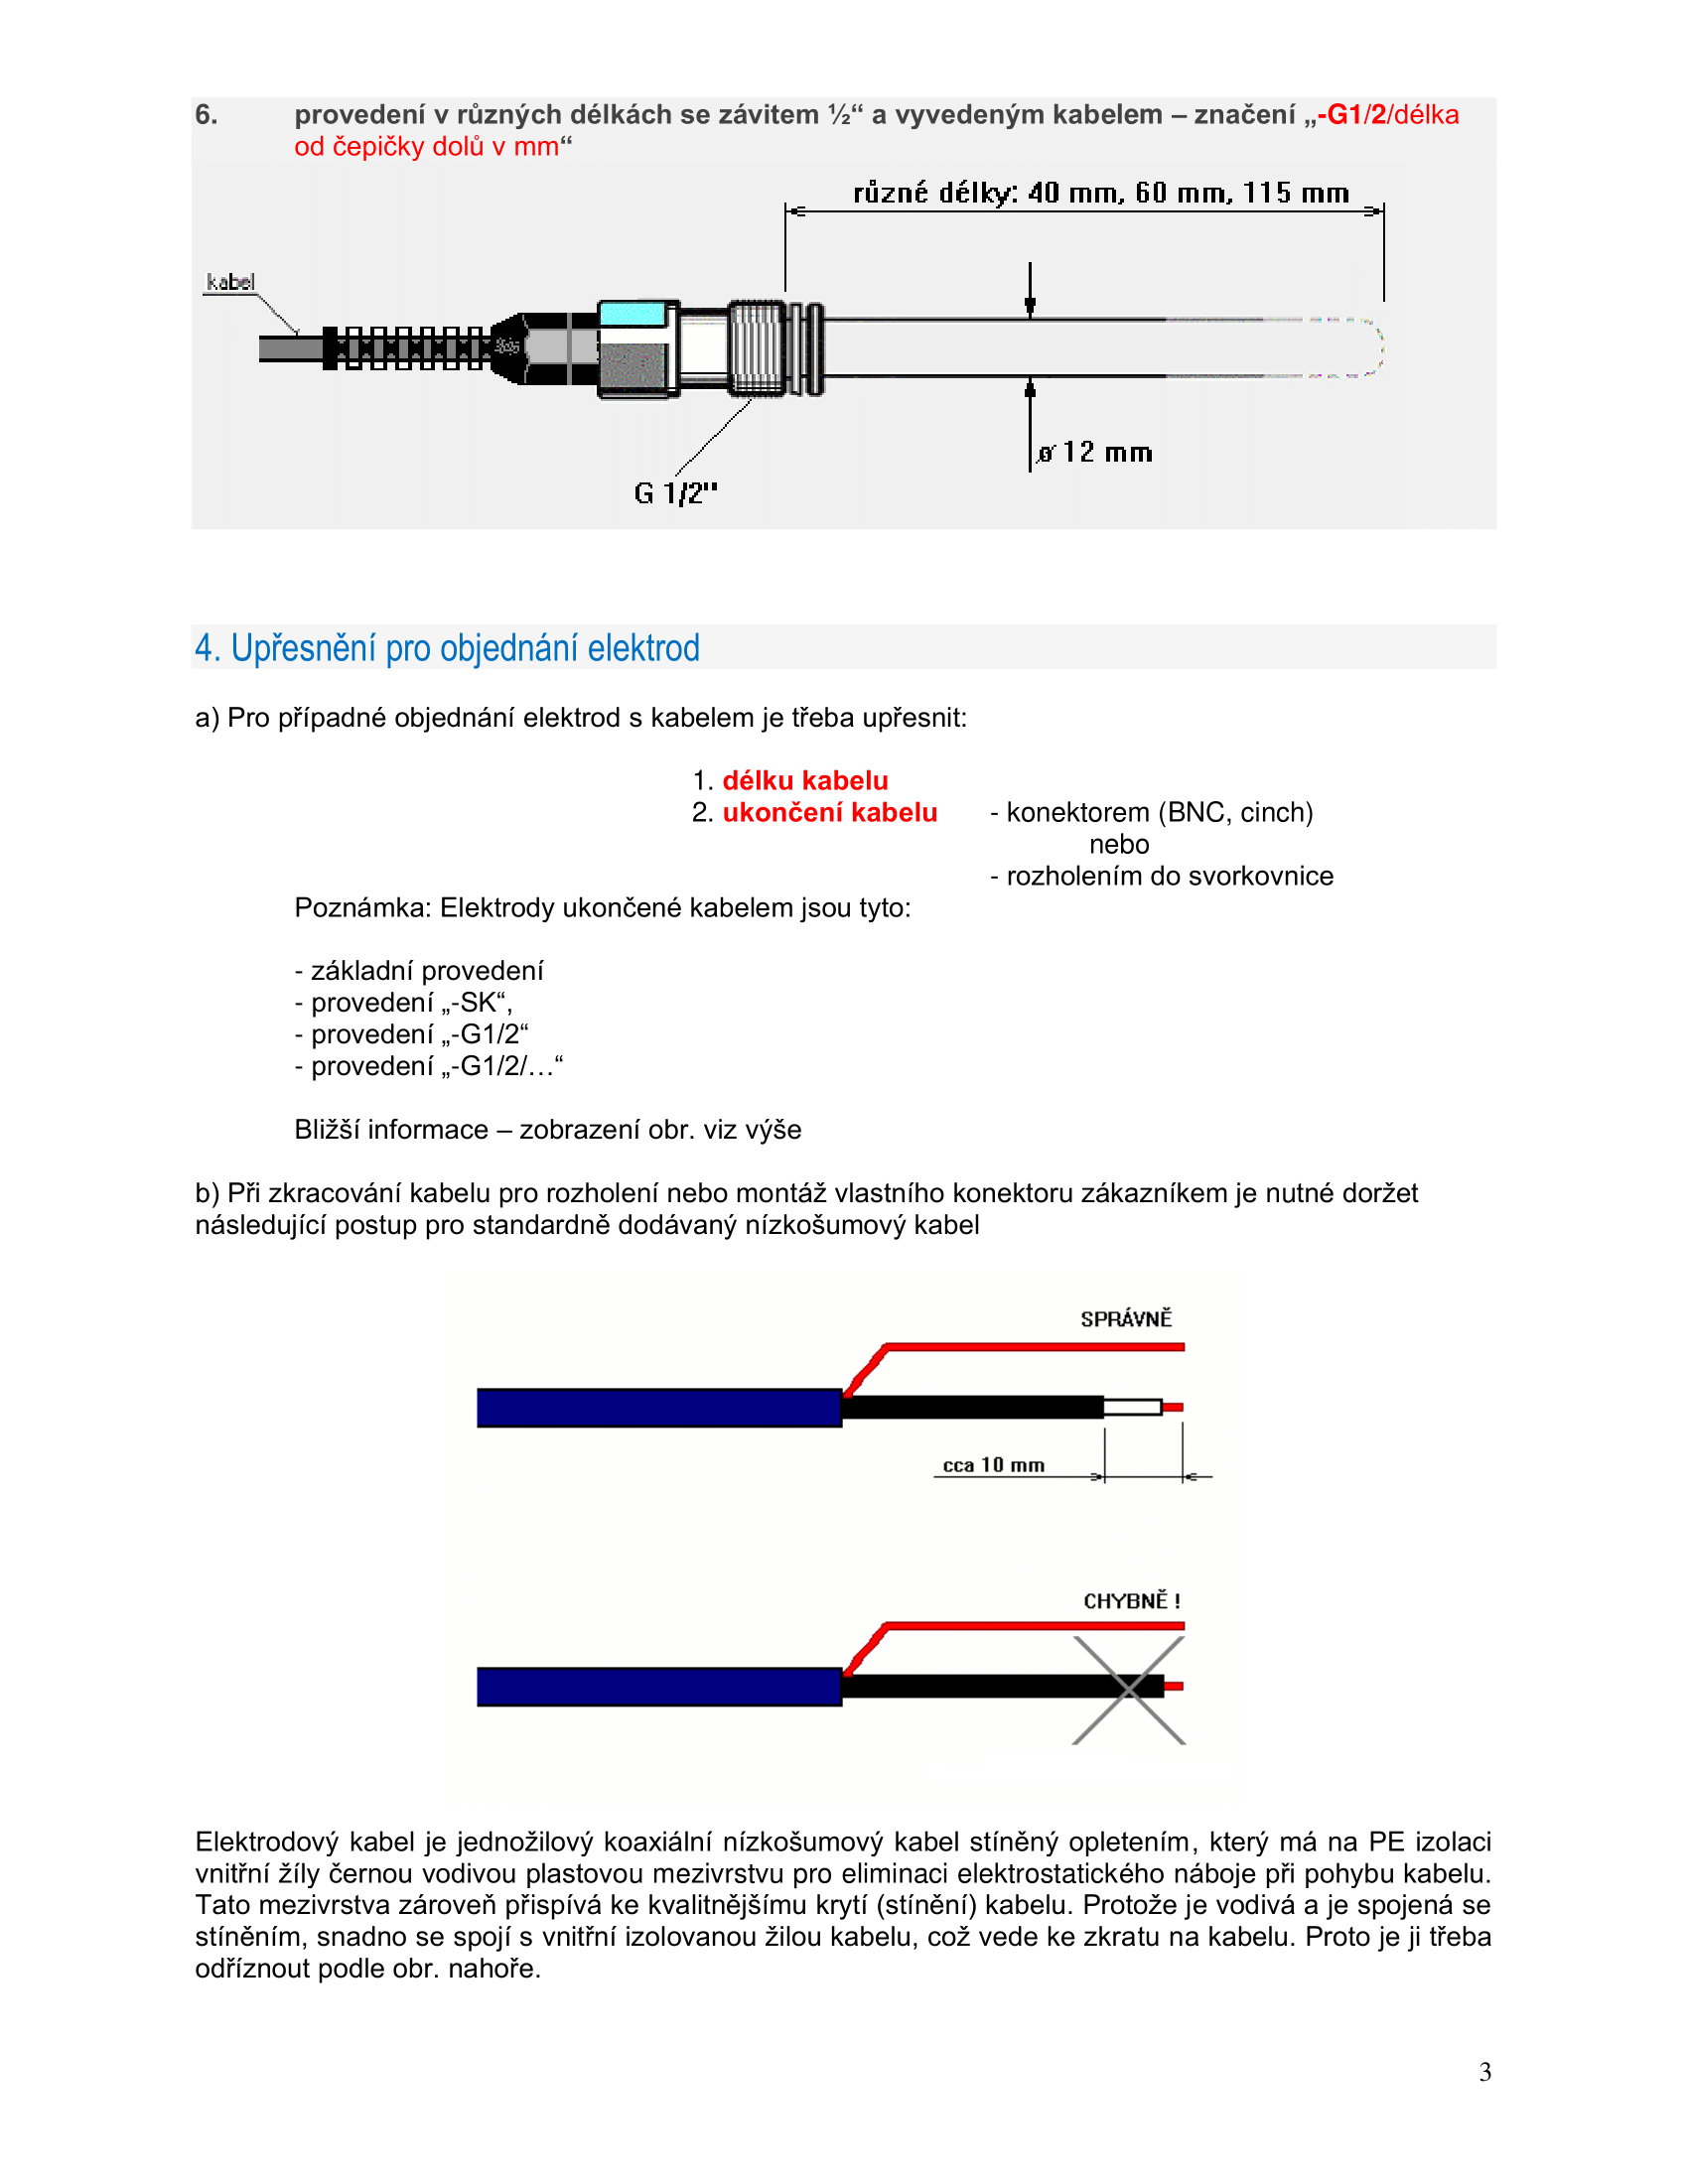 ph-elektrody-prumyslove-2022-3.png